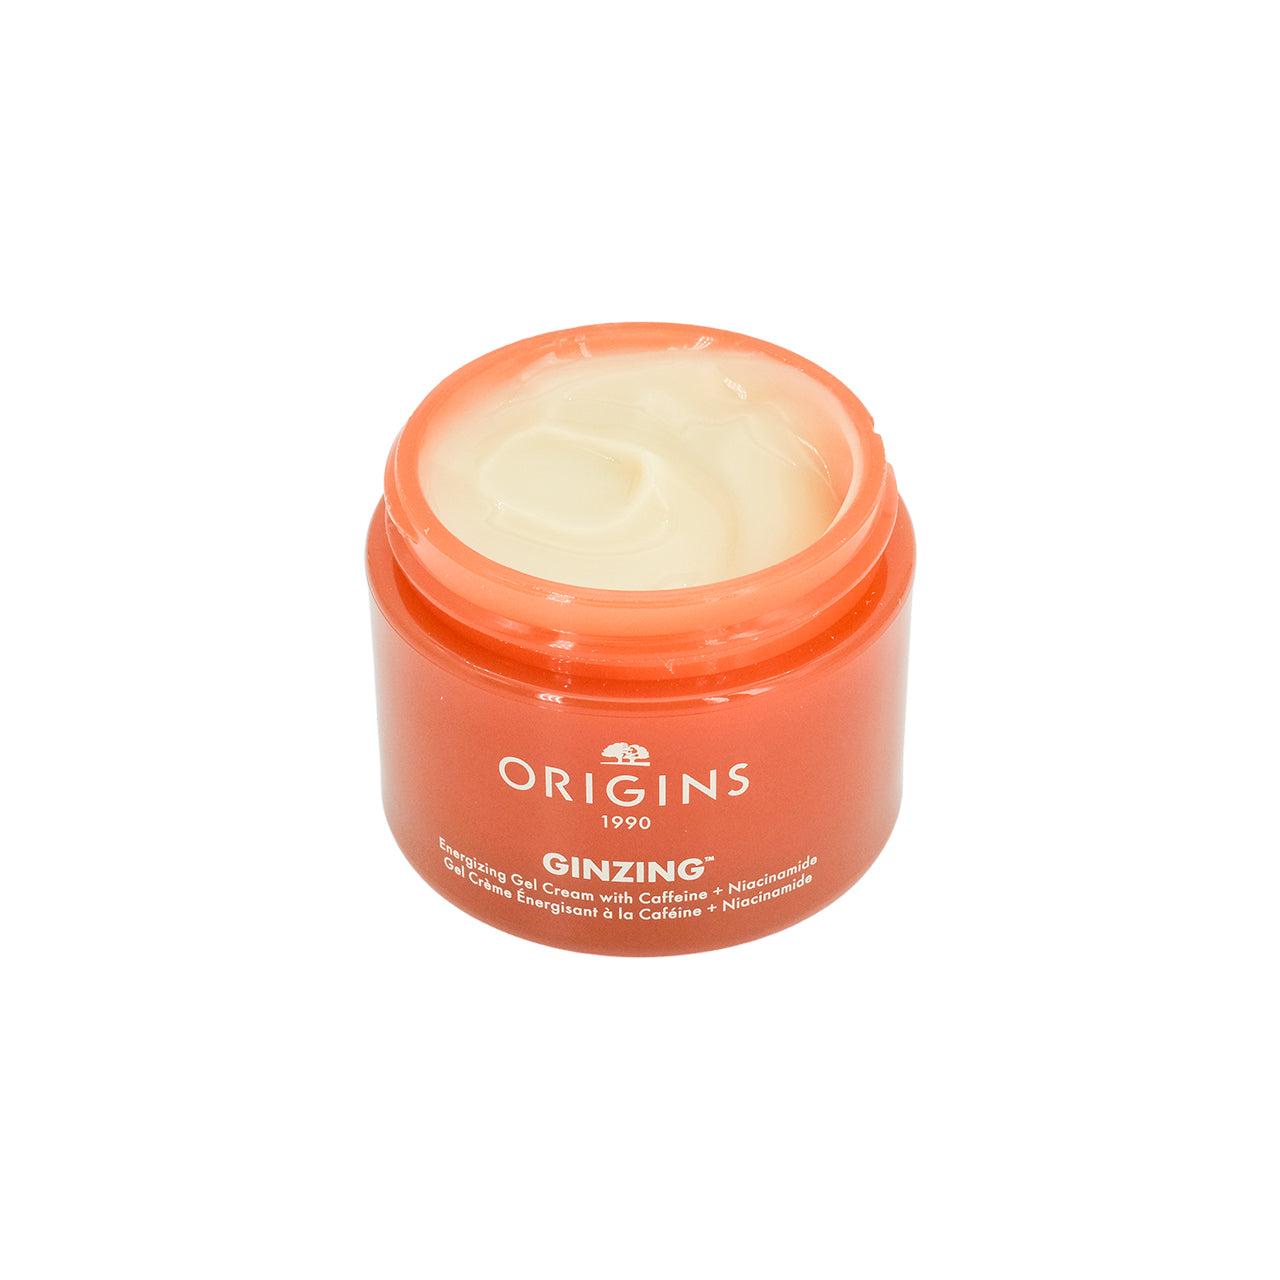 Origins Ginzing™ Energizing Gel Cream 50ml